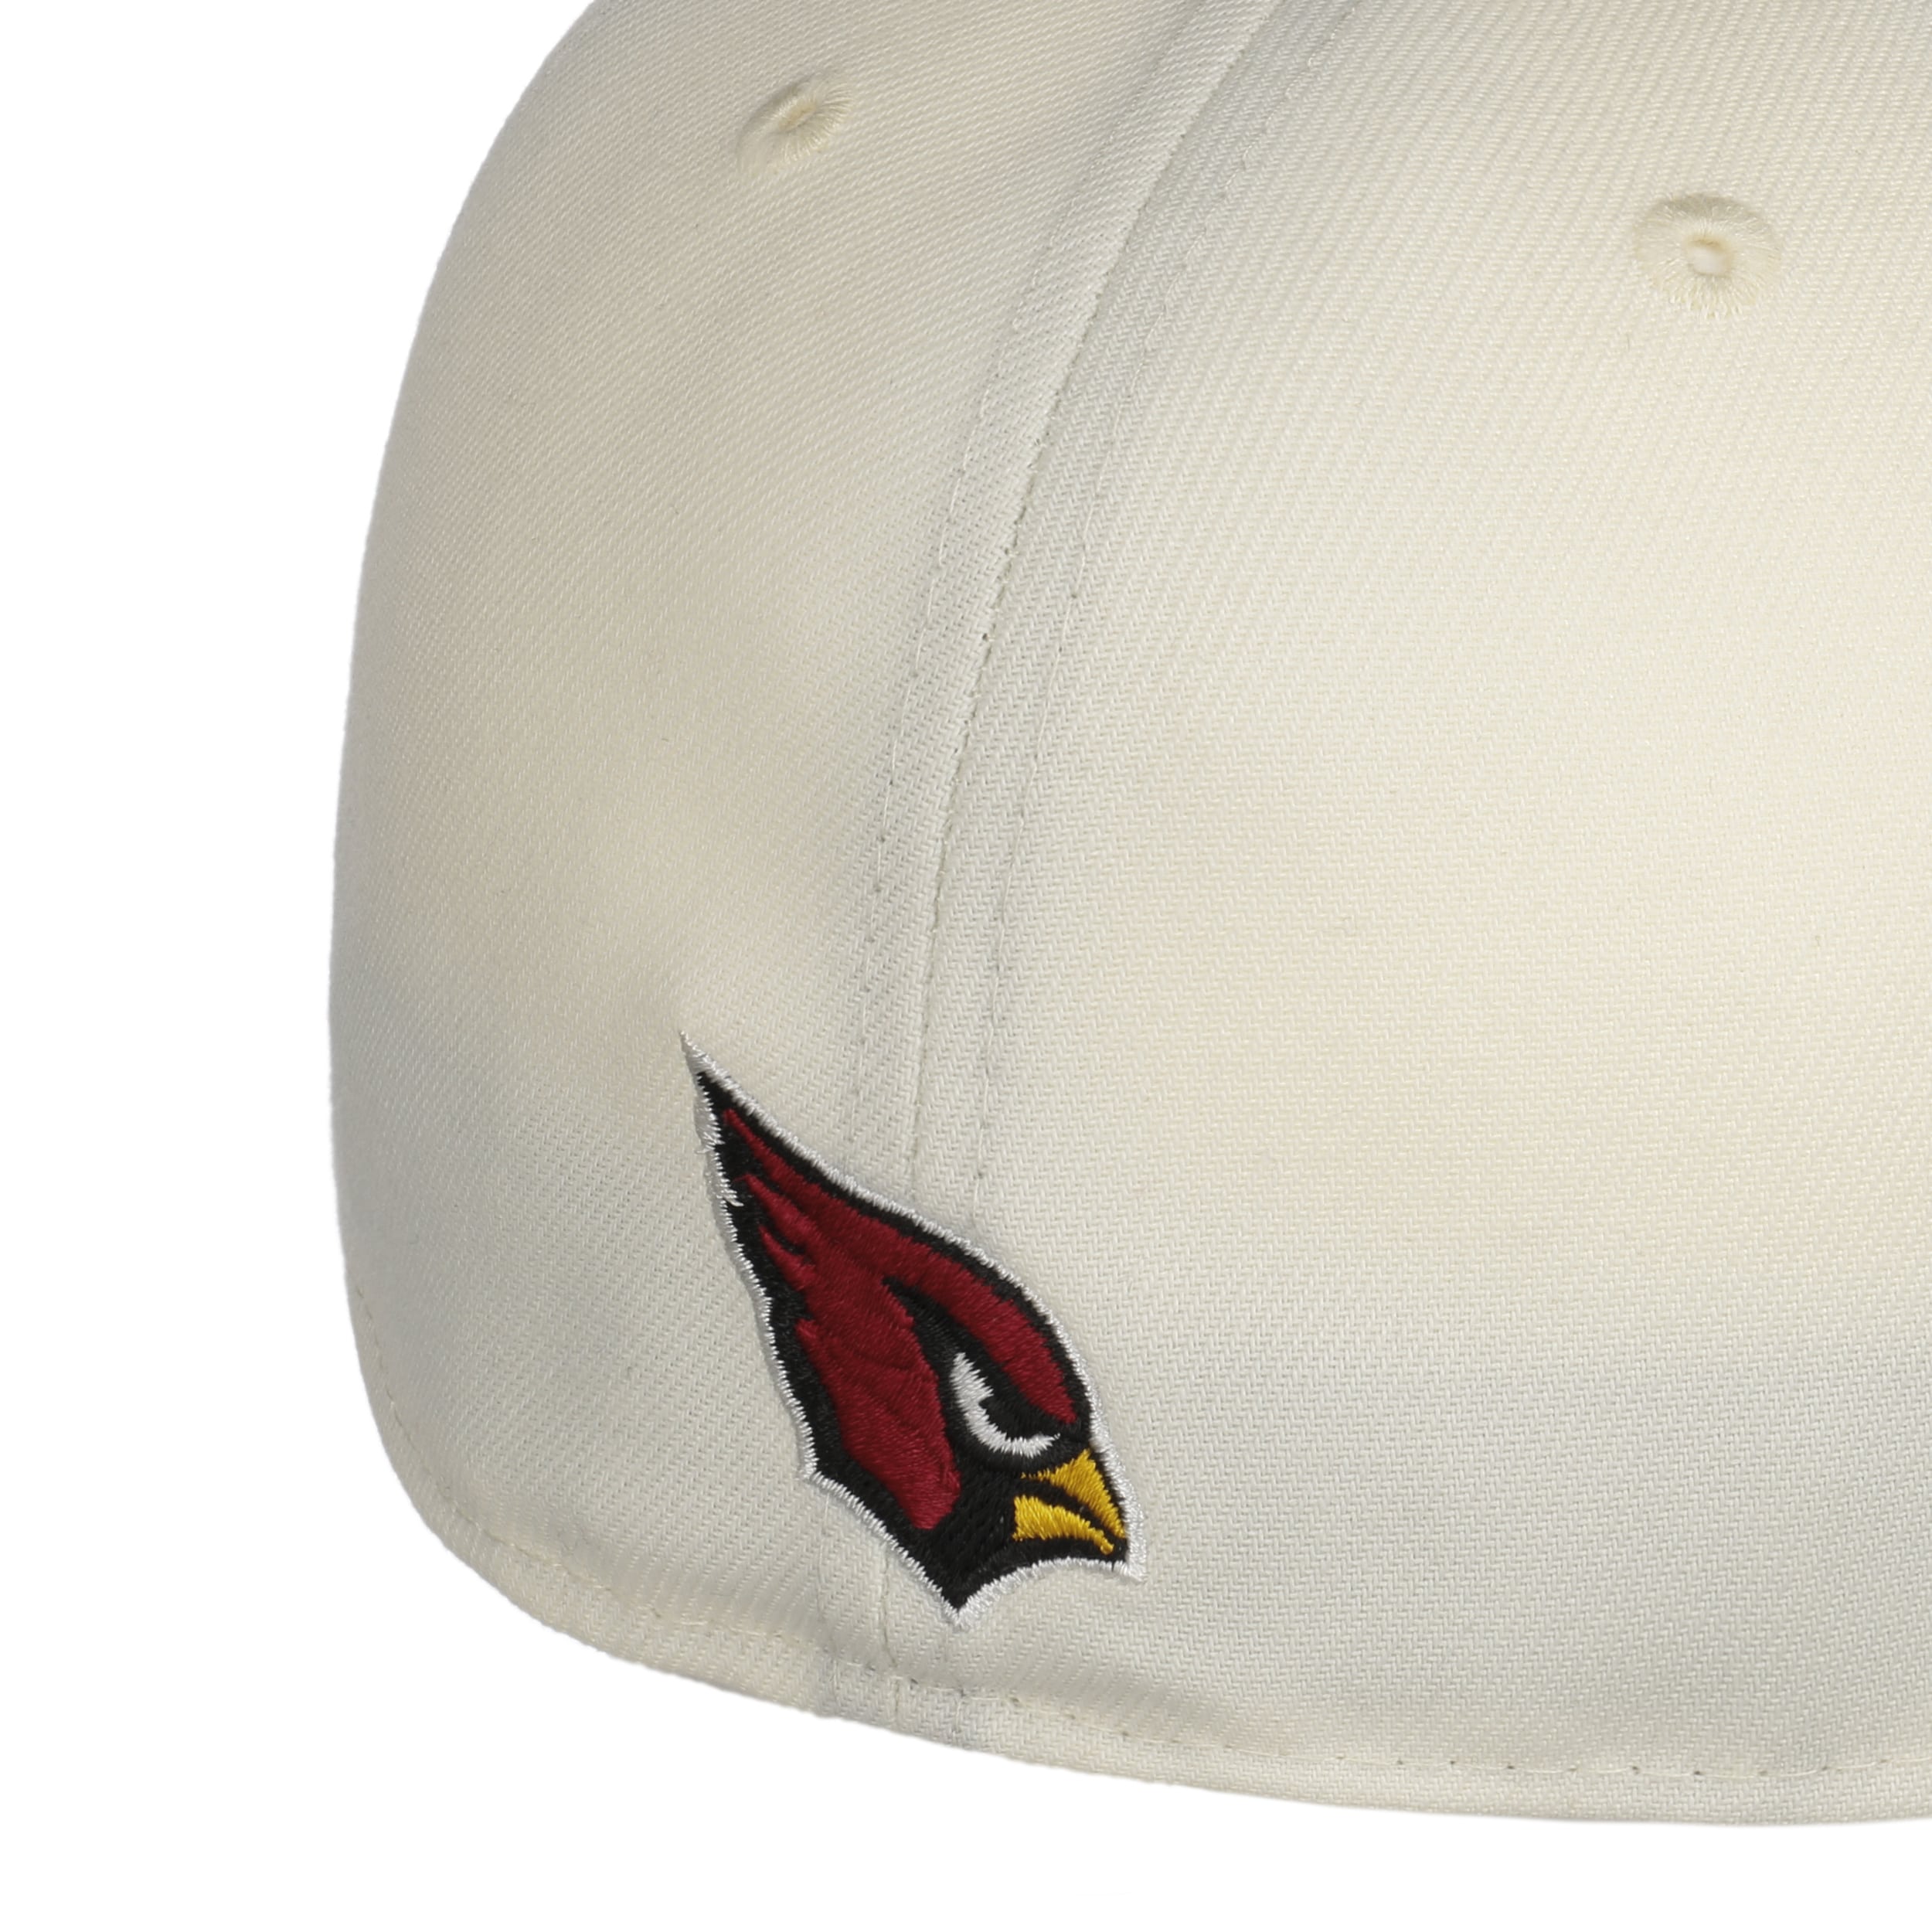 59Fifty NFL CC Cardinals Cap by New Era --> Shop Hats, Beanies & Caps  online ▷ Hatshopping